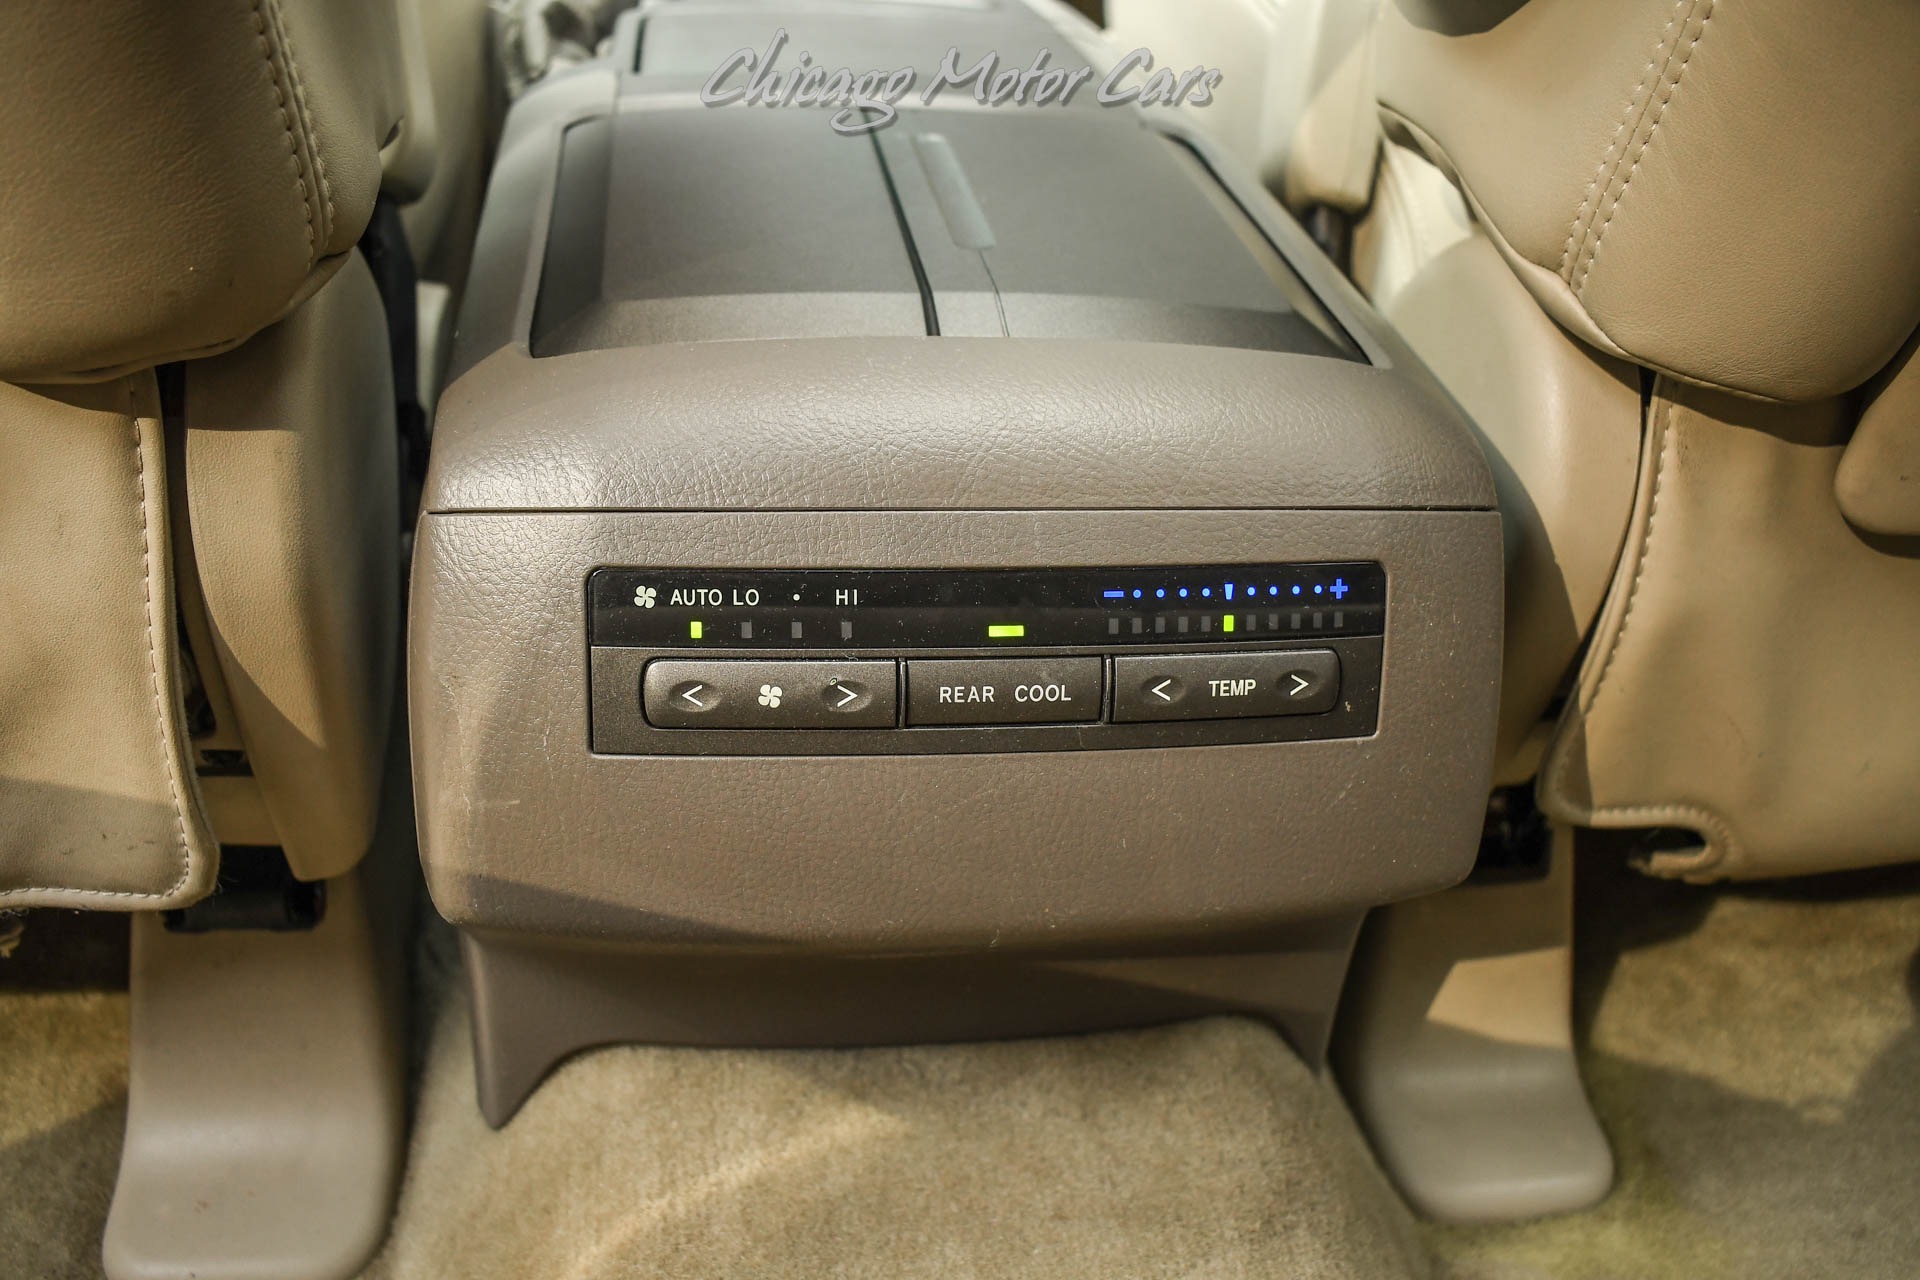 Used-2007-Lexus-GX470-SUV-Nav--Audio-Pkg-Third-Row-Seating-TRD-Wheels-Excellent-Condition